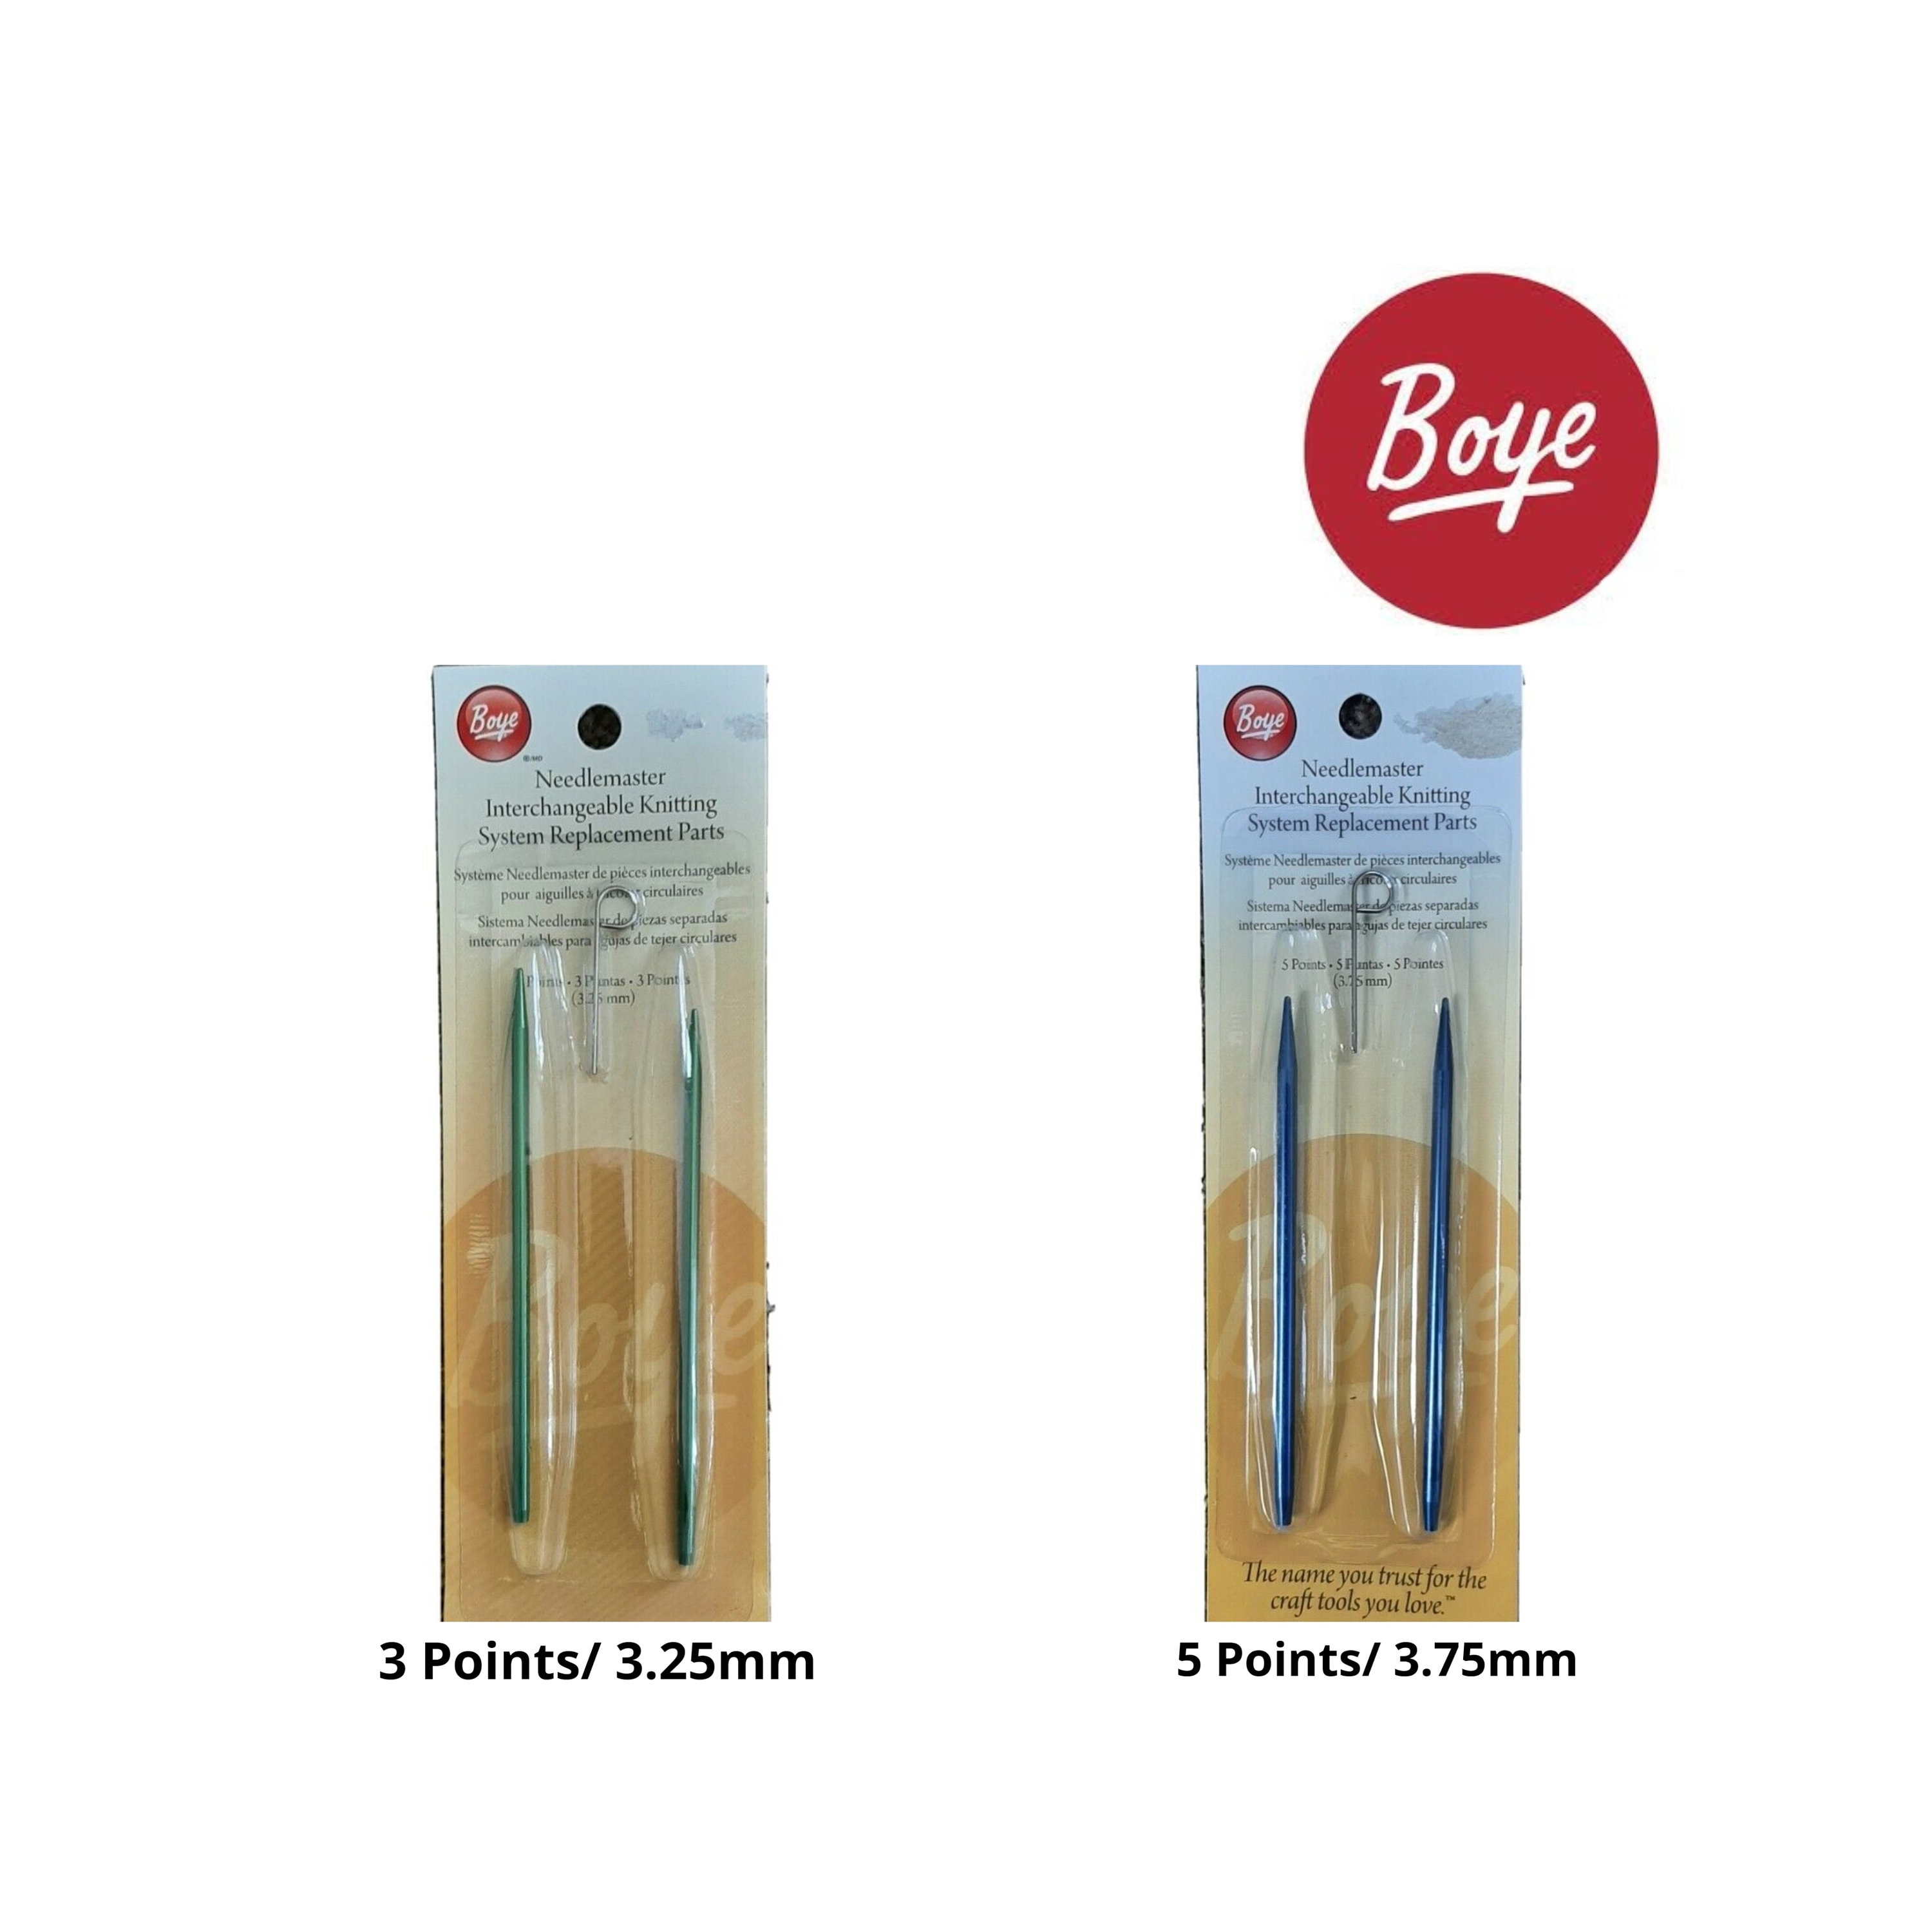 Boye-wrights Circular Knitting Needles, Aluminum Needles, Circular Needles,  Nylon Cord, 3 Lengths 16, 29 & 36 